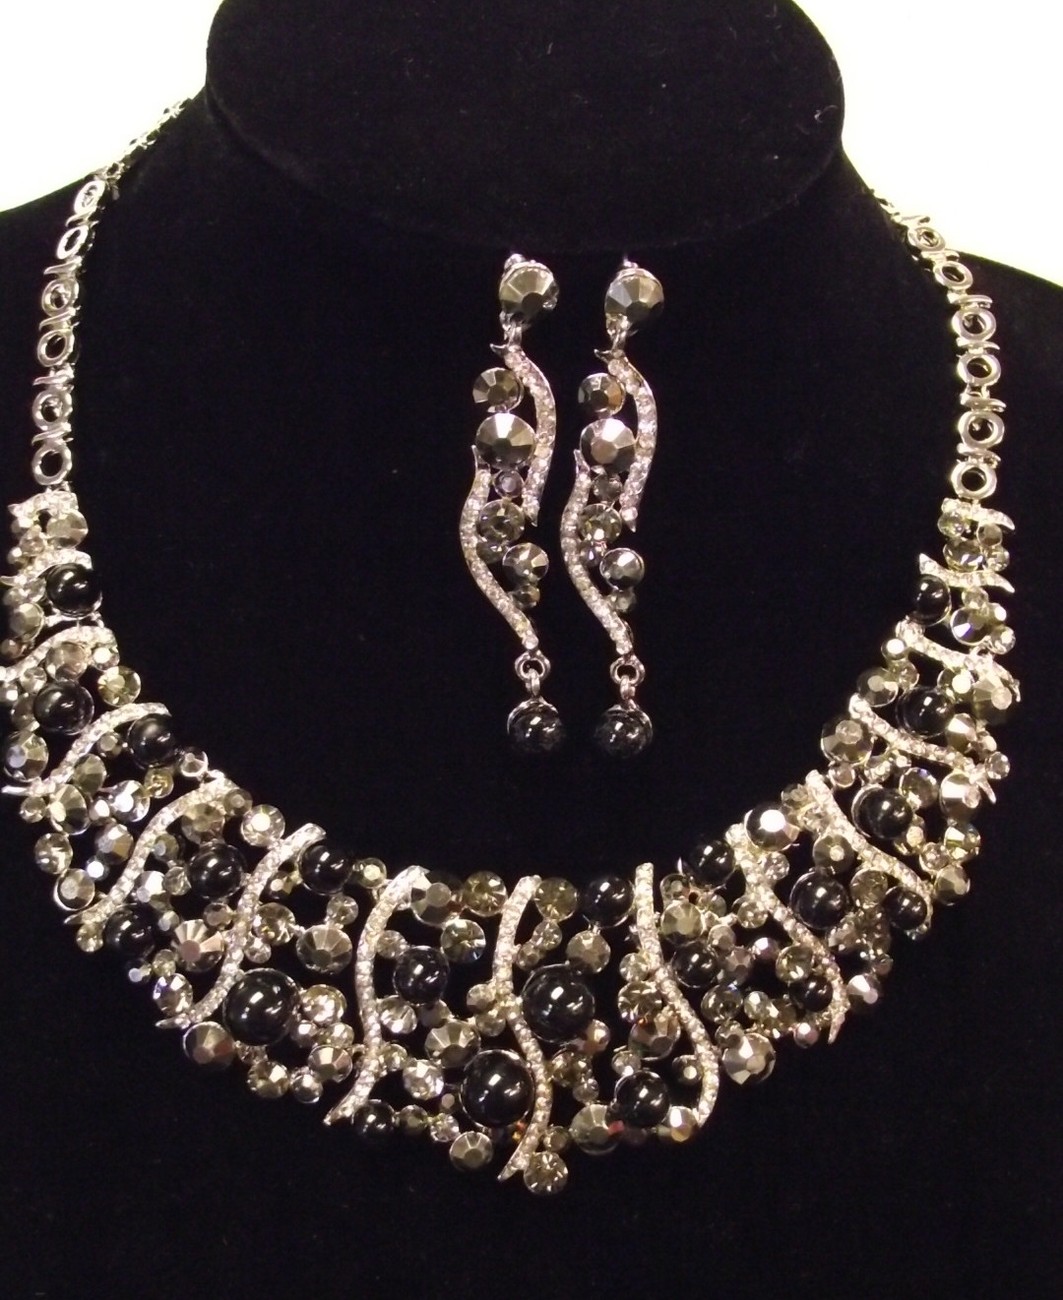 Classic Black Pearls & Swarovski Crystal Bridal Necklace Set - Jewelry Sets